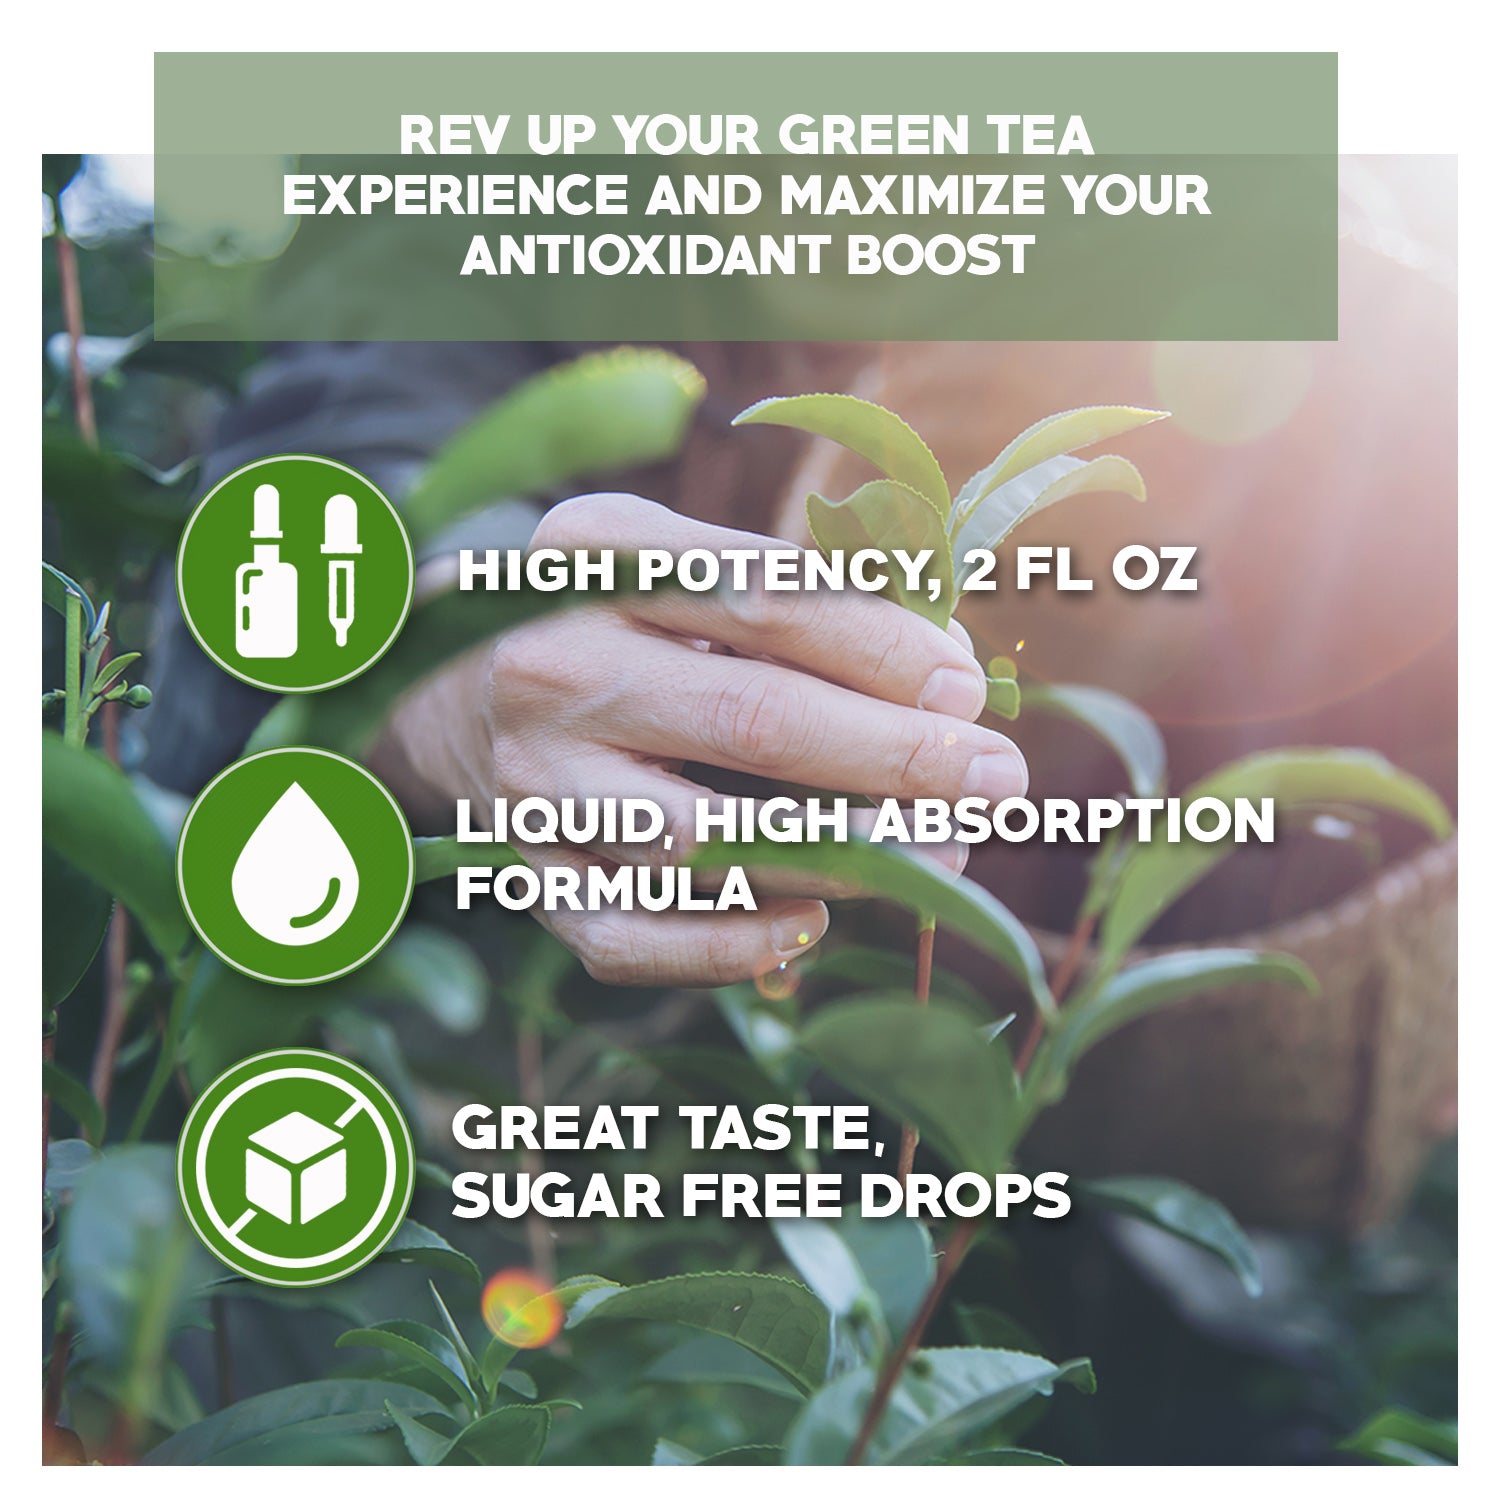 Maximize antioxidant boost